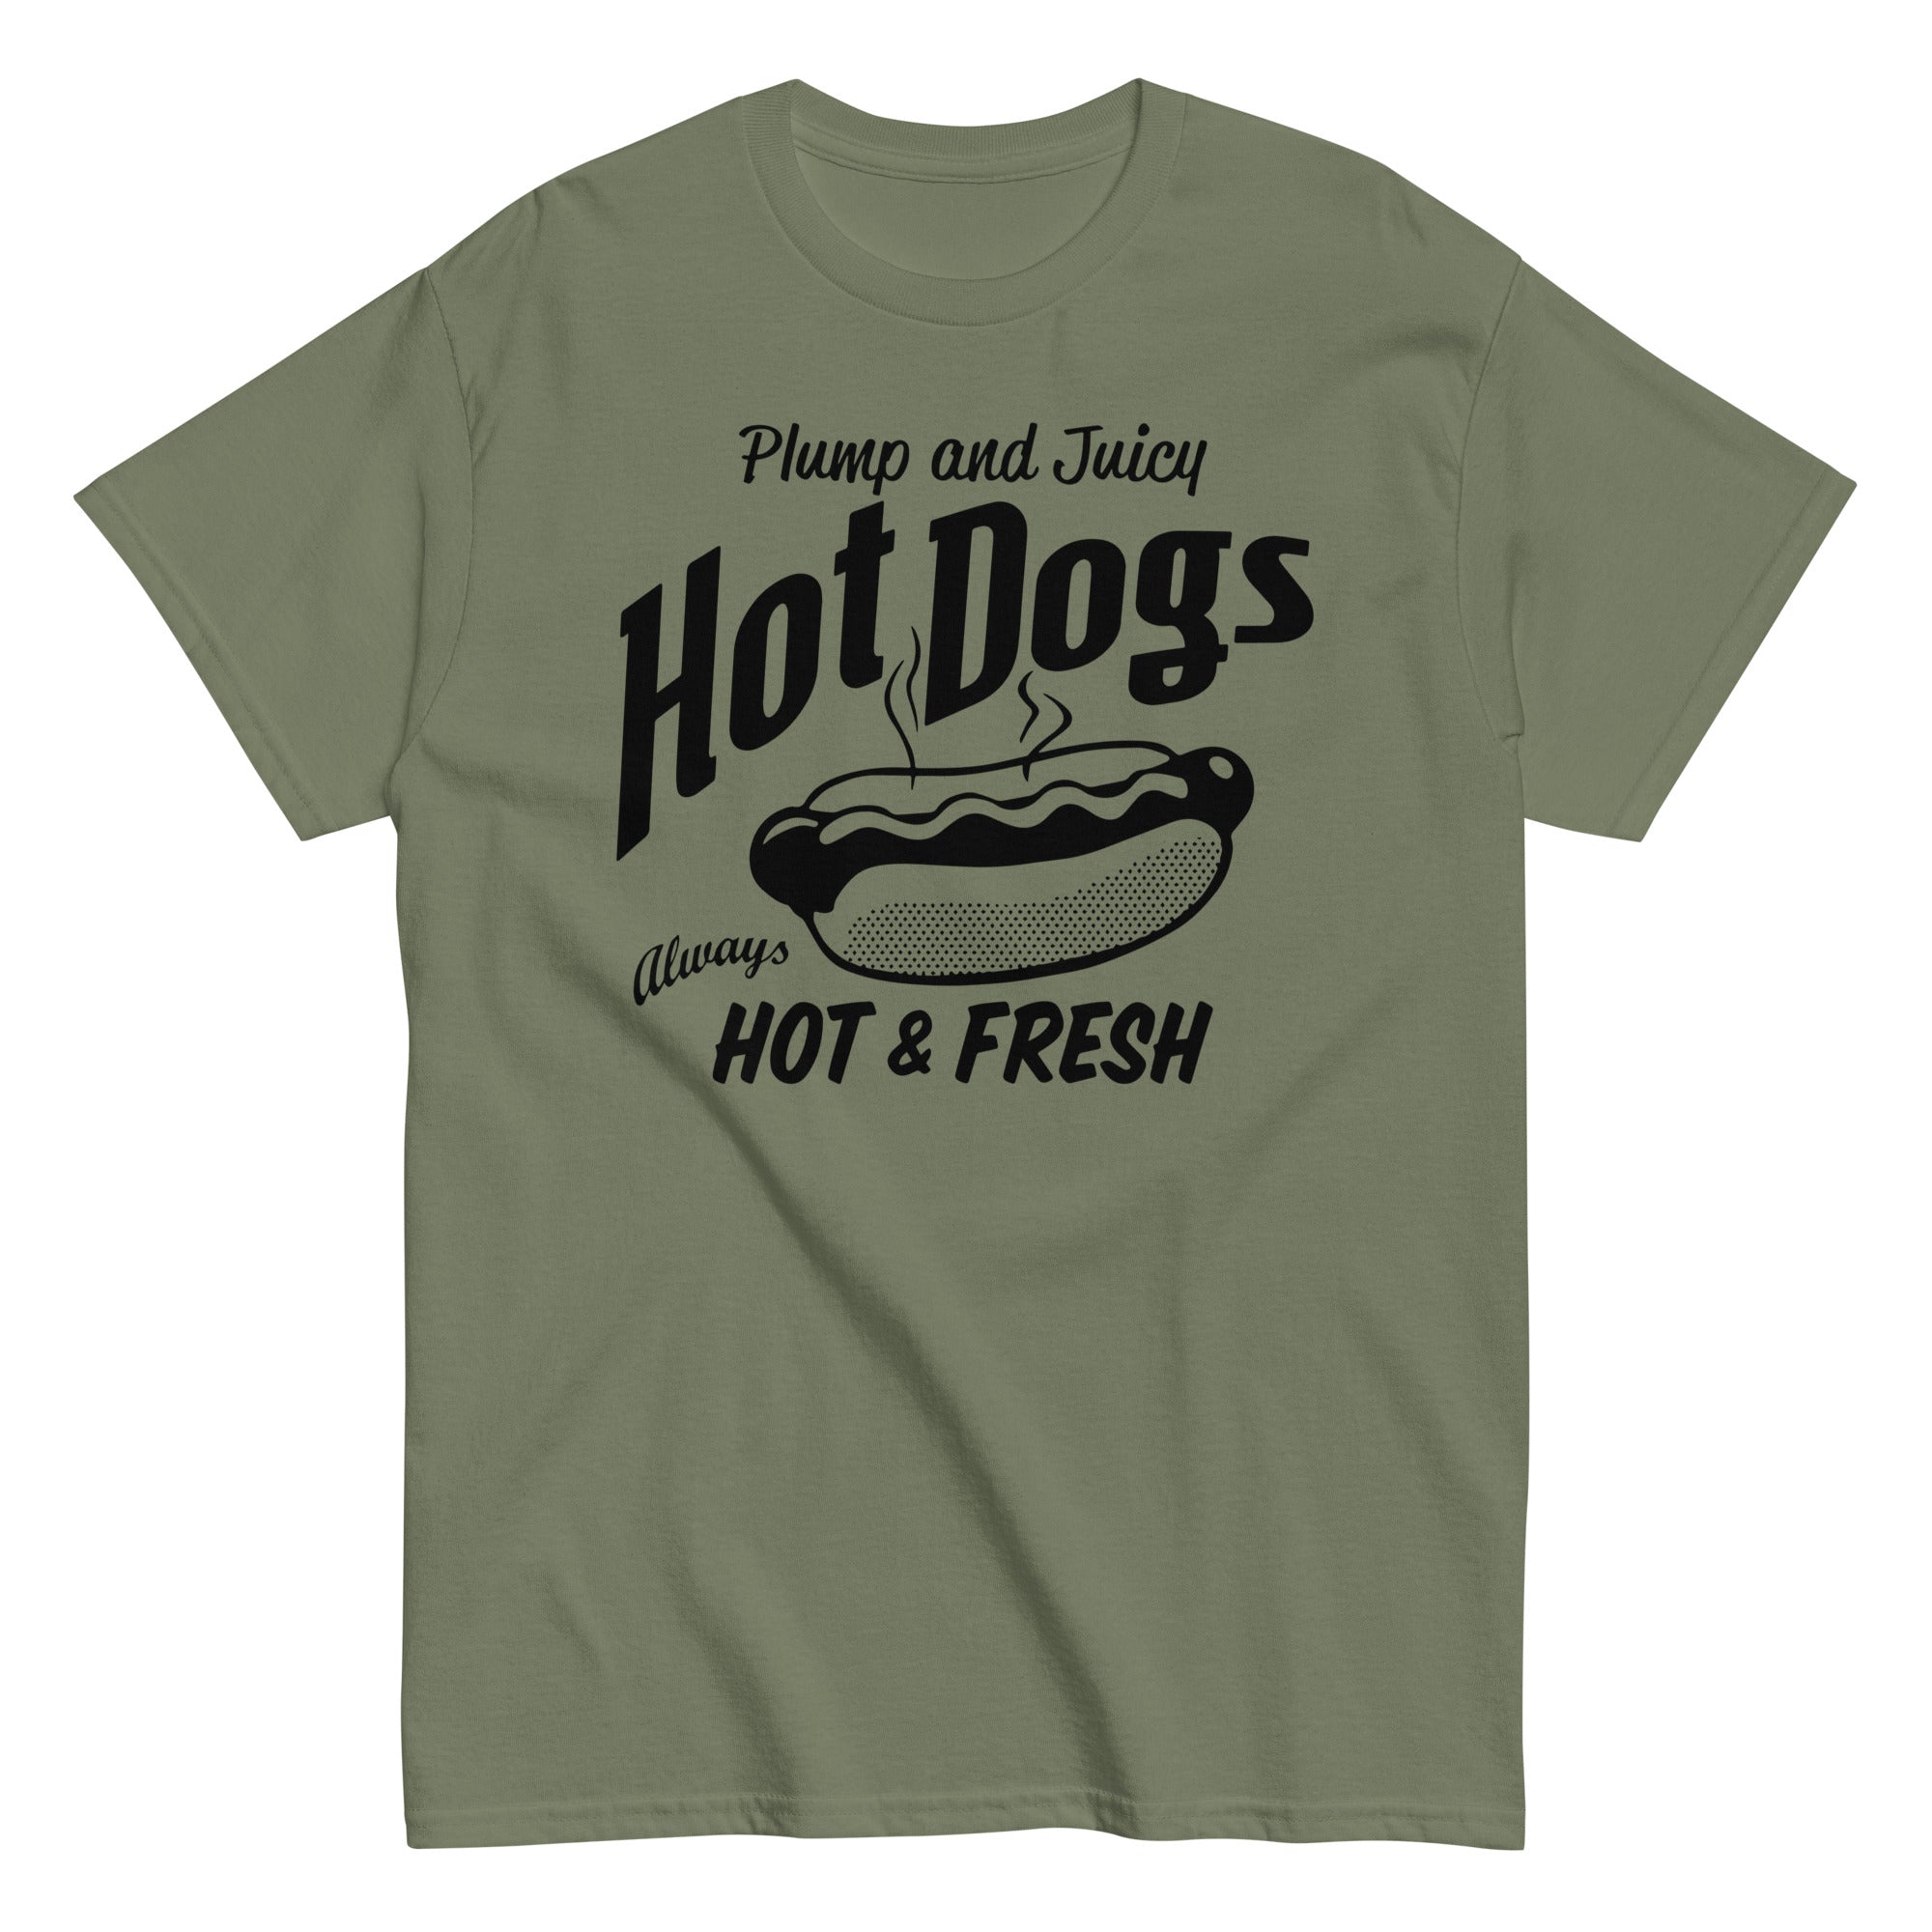 Juicy Hot Dogs T-Shirt